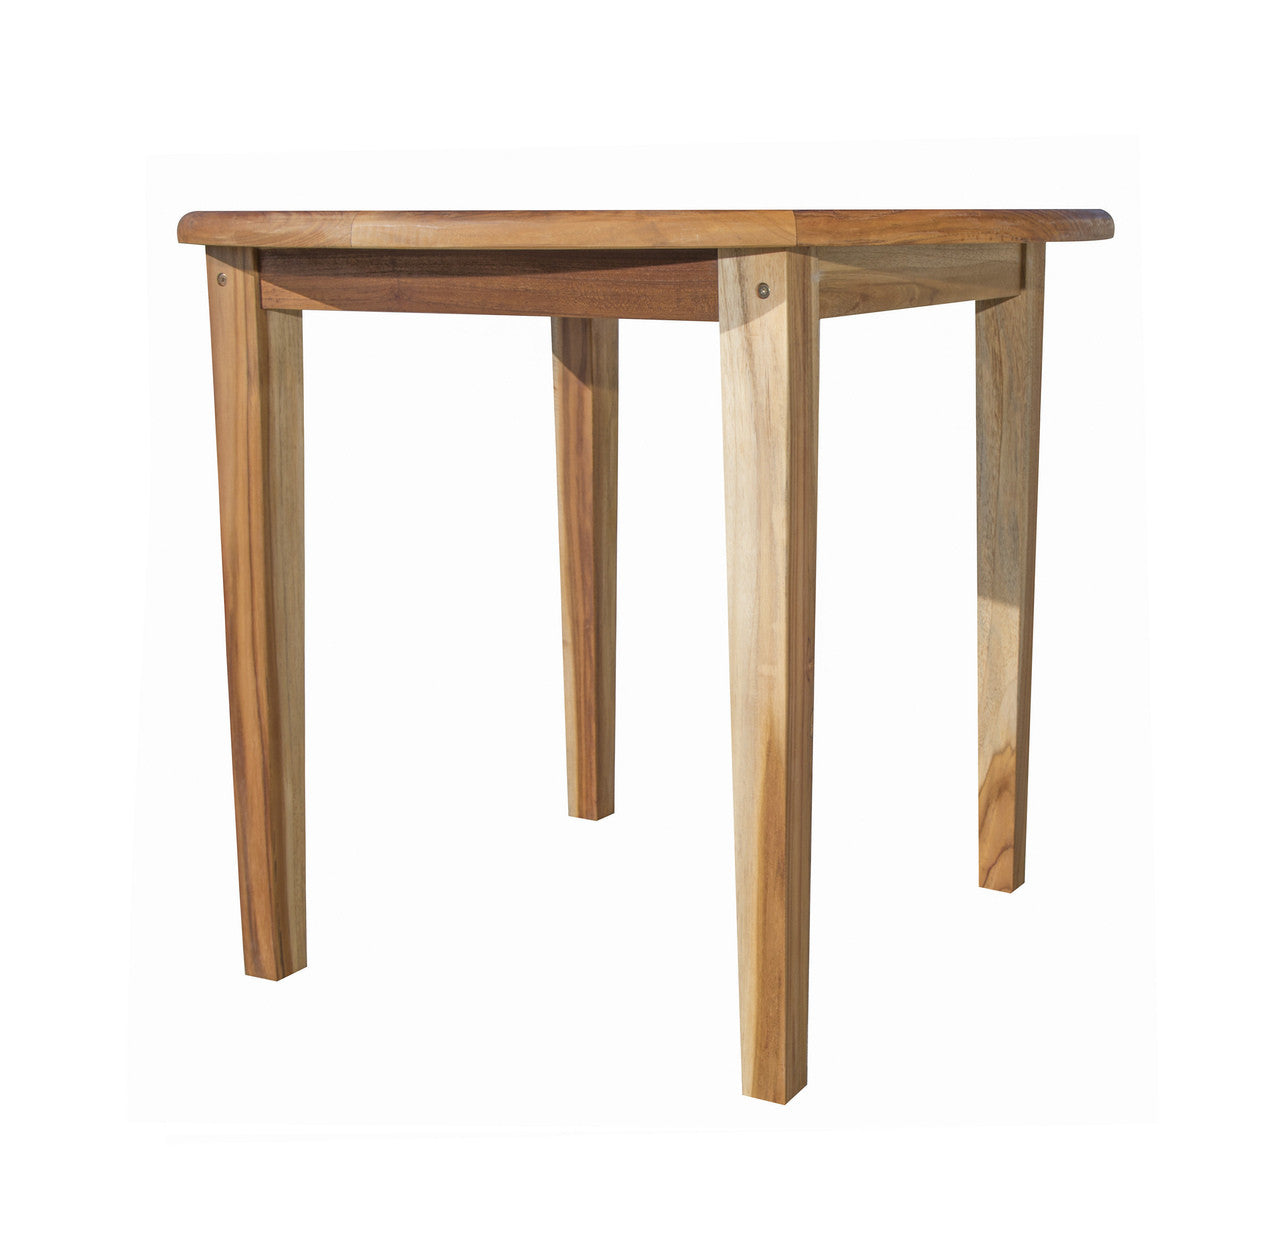 EcoDecors® Oasis® 36" Teak Wood Round Table in EarthyTeak Finish